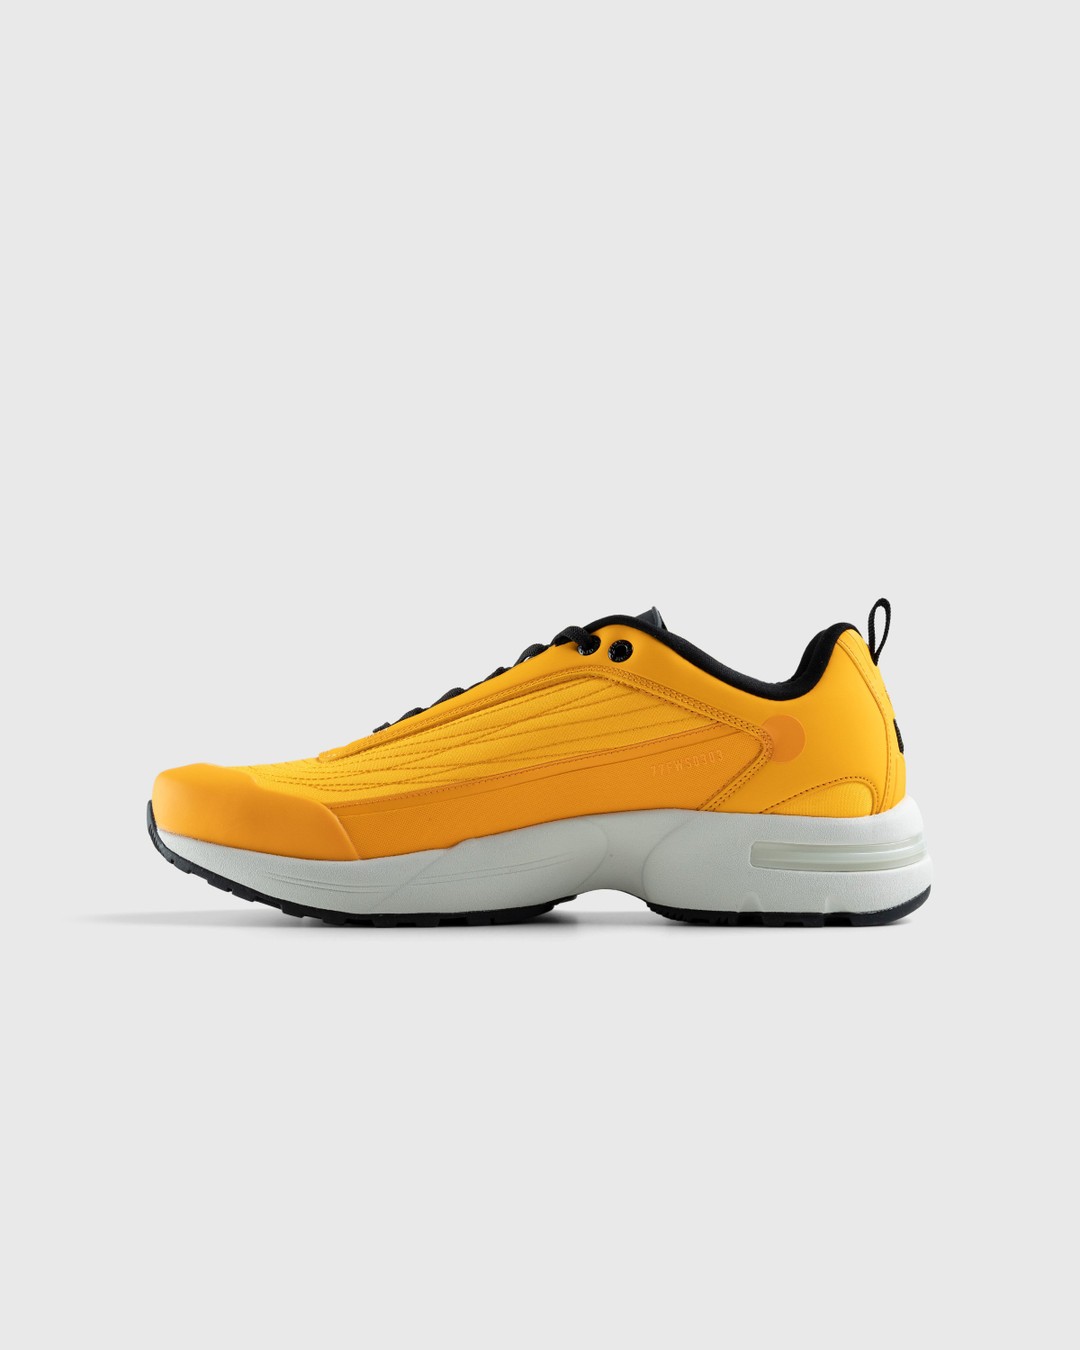 Stone Island – Grime Sneaker Orange - Low Top Sneakers - Orange - Image 2